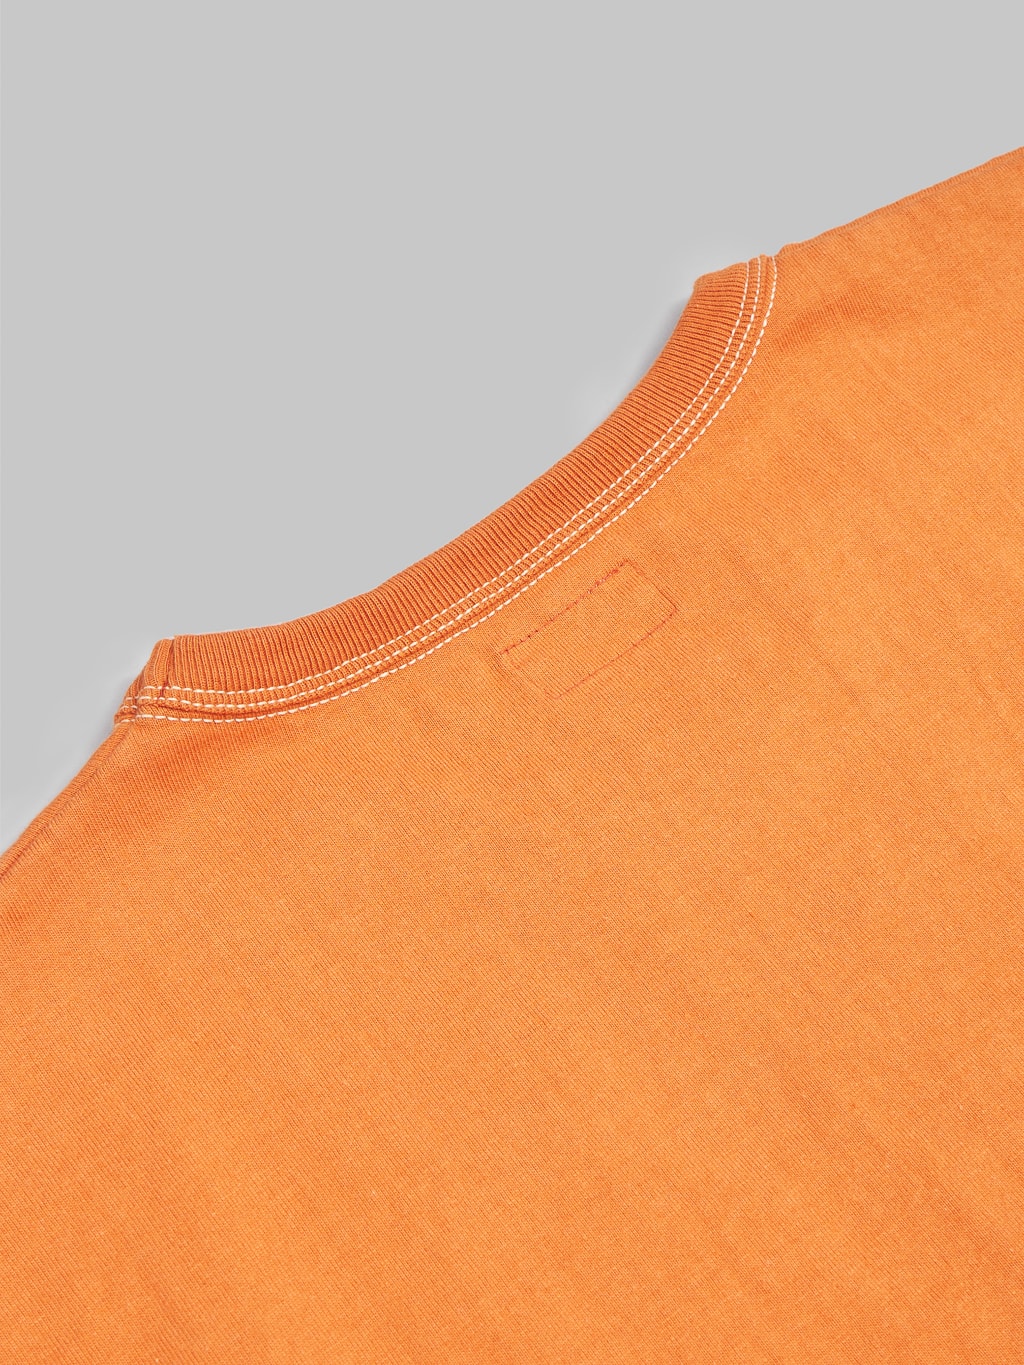 The Flat Head Loopwheeled Heavyweight Plain TShirt Dark Orange triple stitched collar